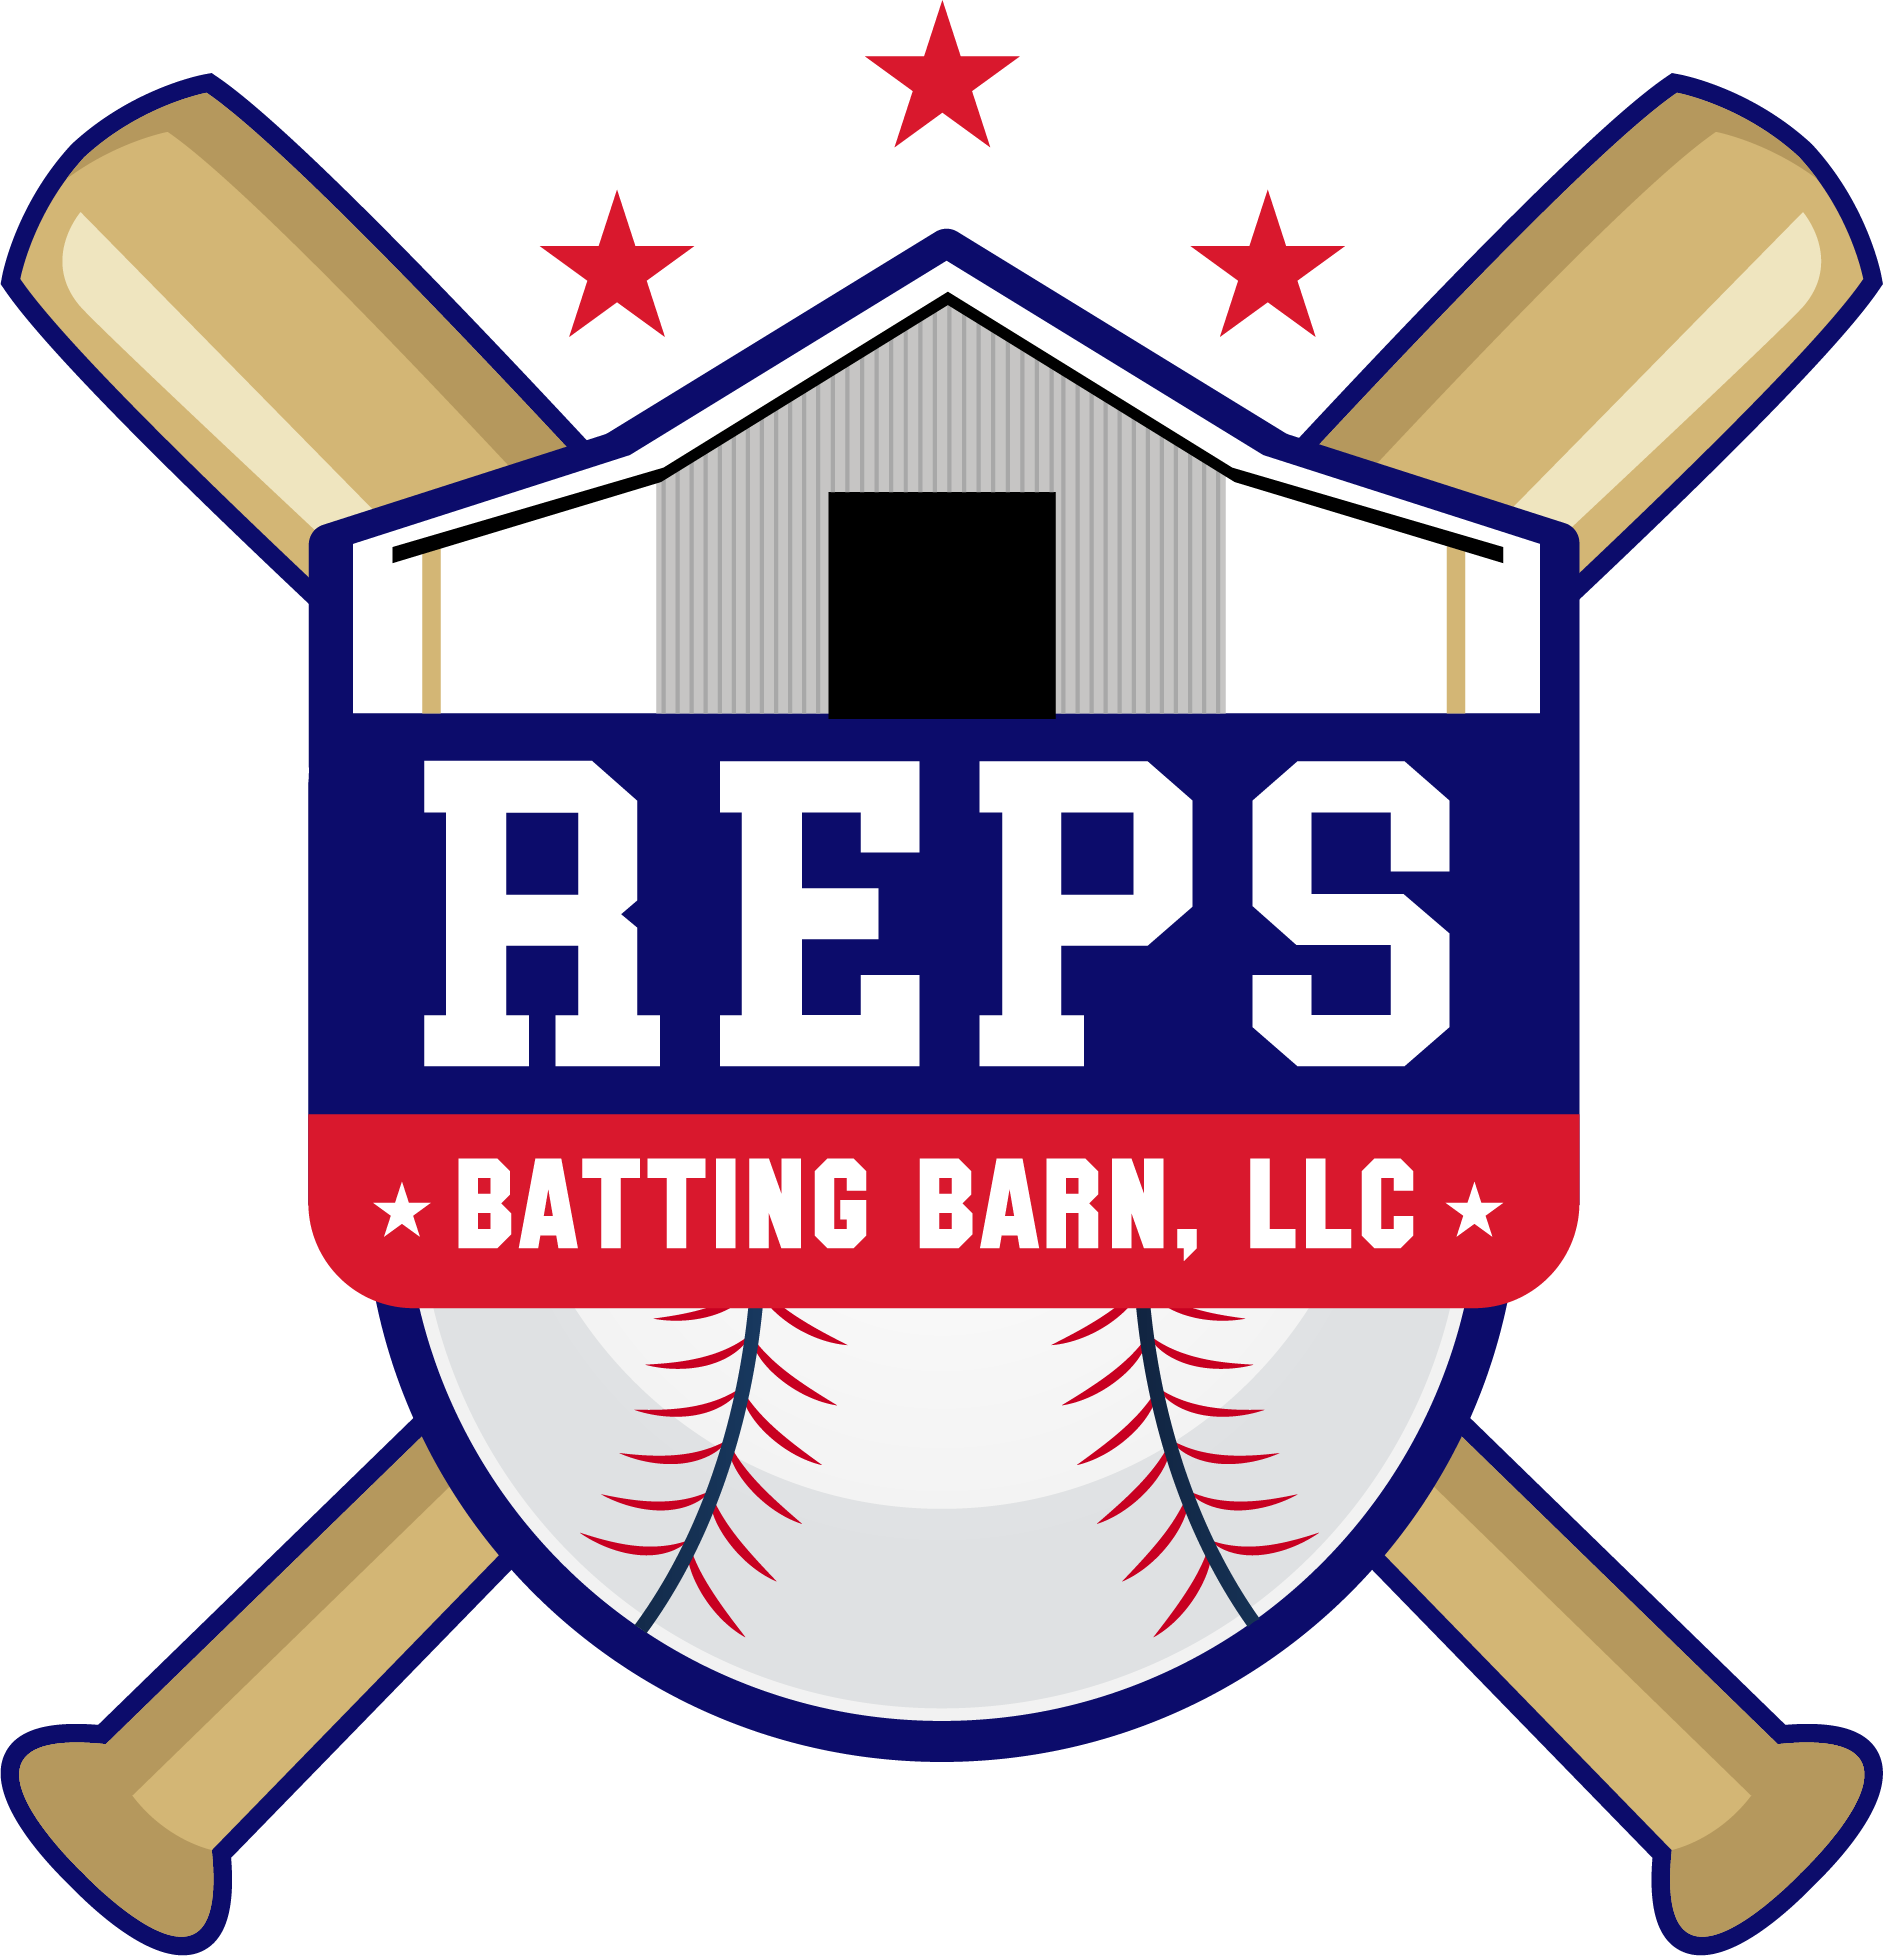 REPS Batting Barn, LLC